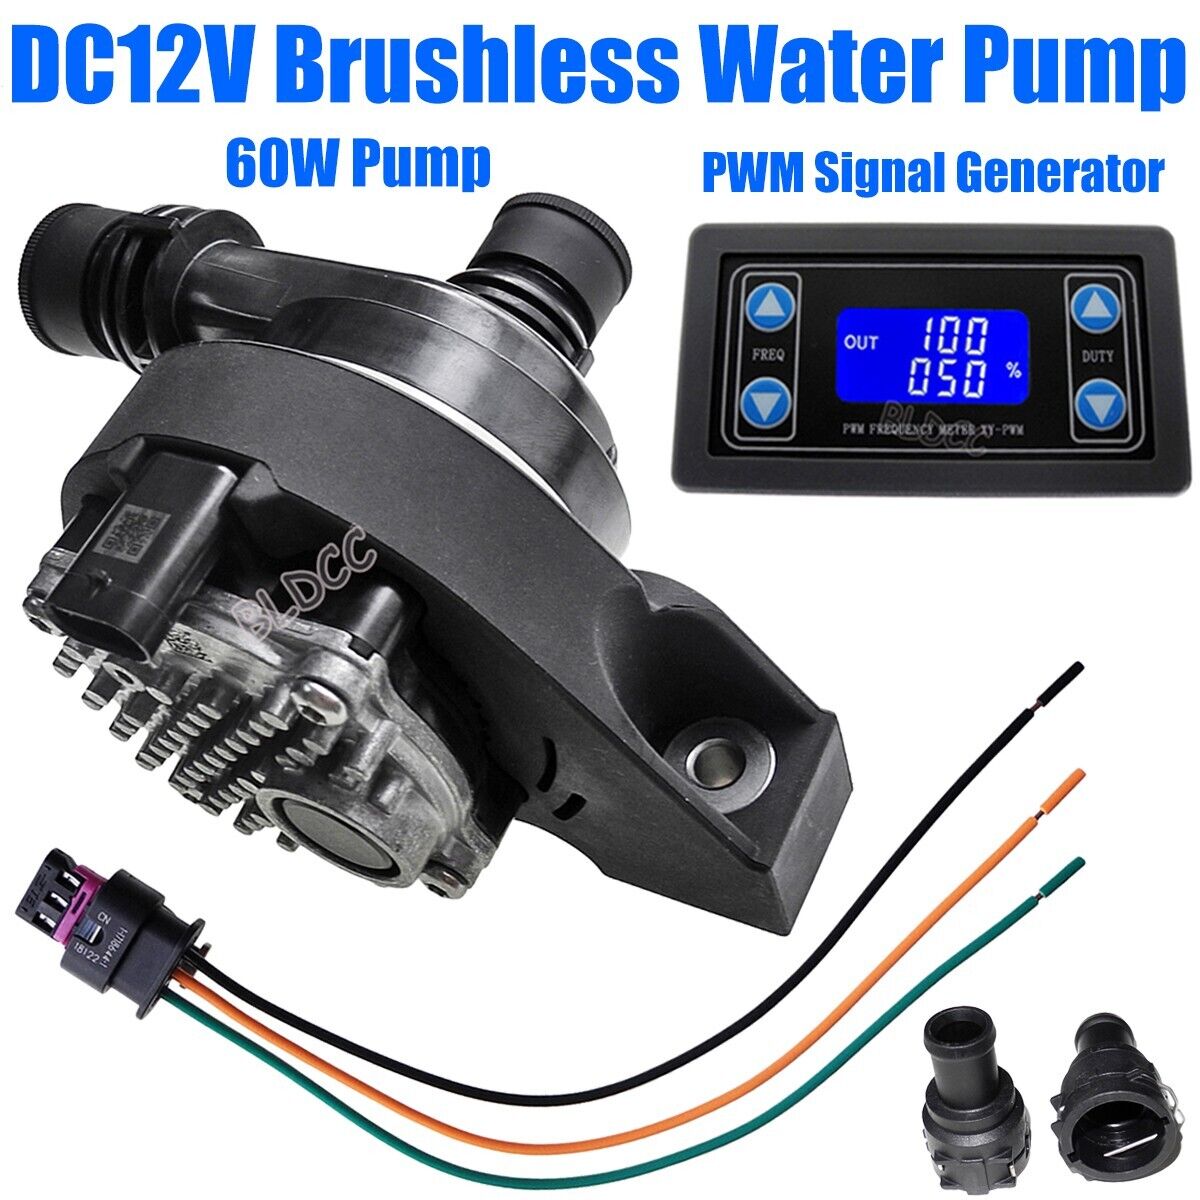 Auto Electric Water Coolant Pump 12V DC 60W Brushless Pump &PWM Signal Generator